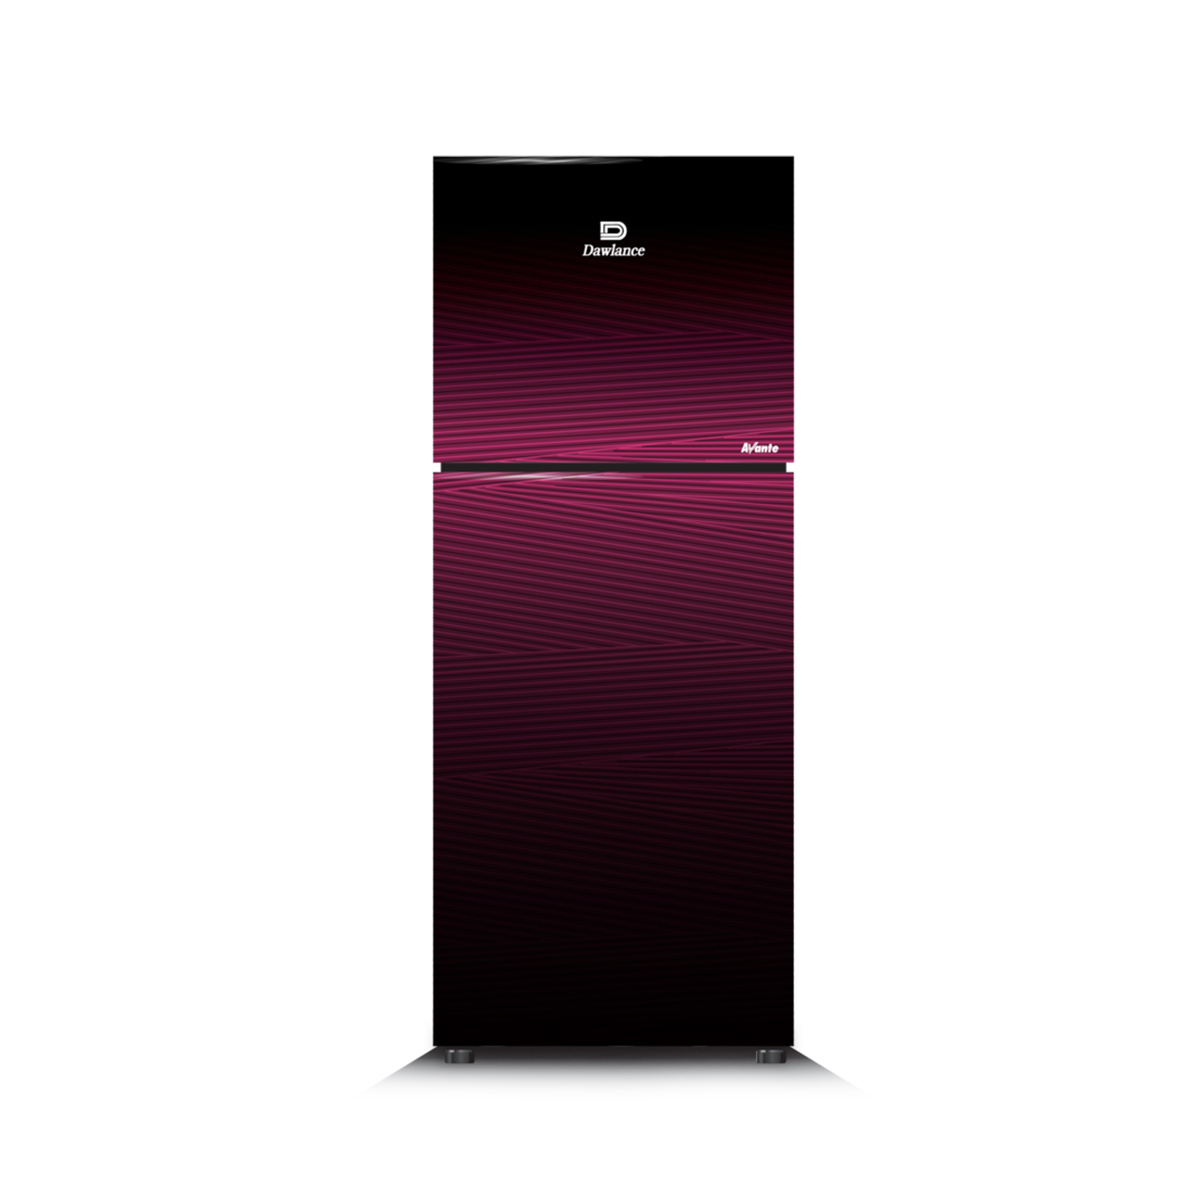 Dawlance Rerigerator 9169 Avante Pearl Burgundy